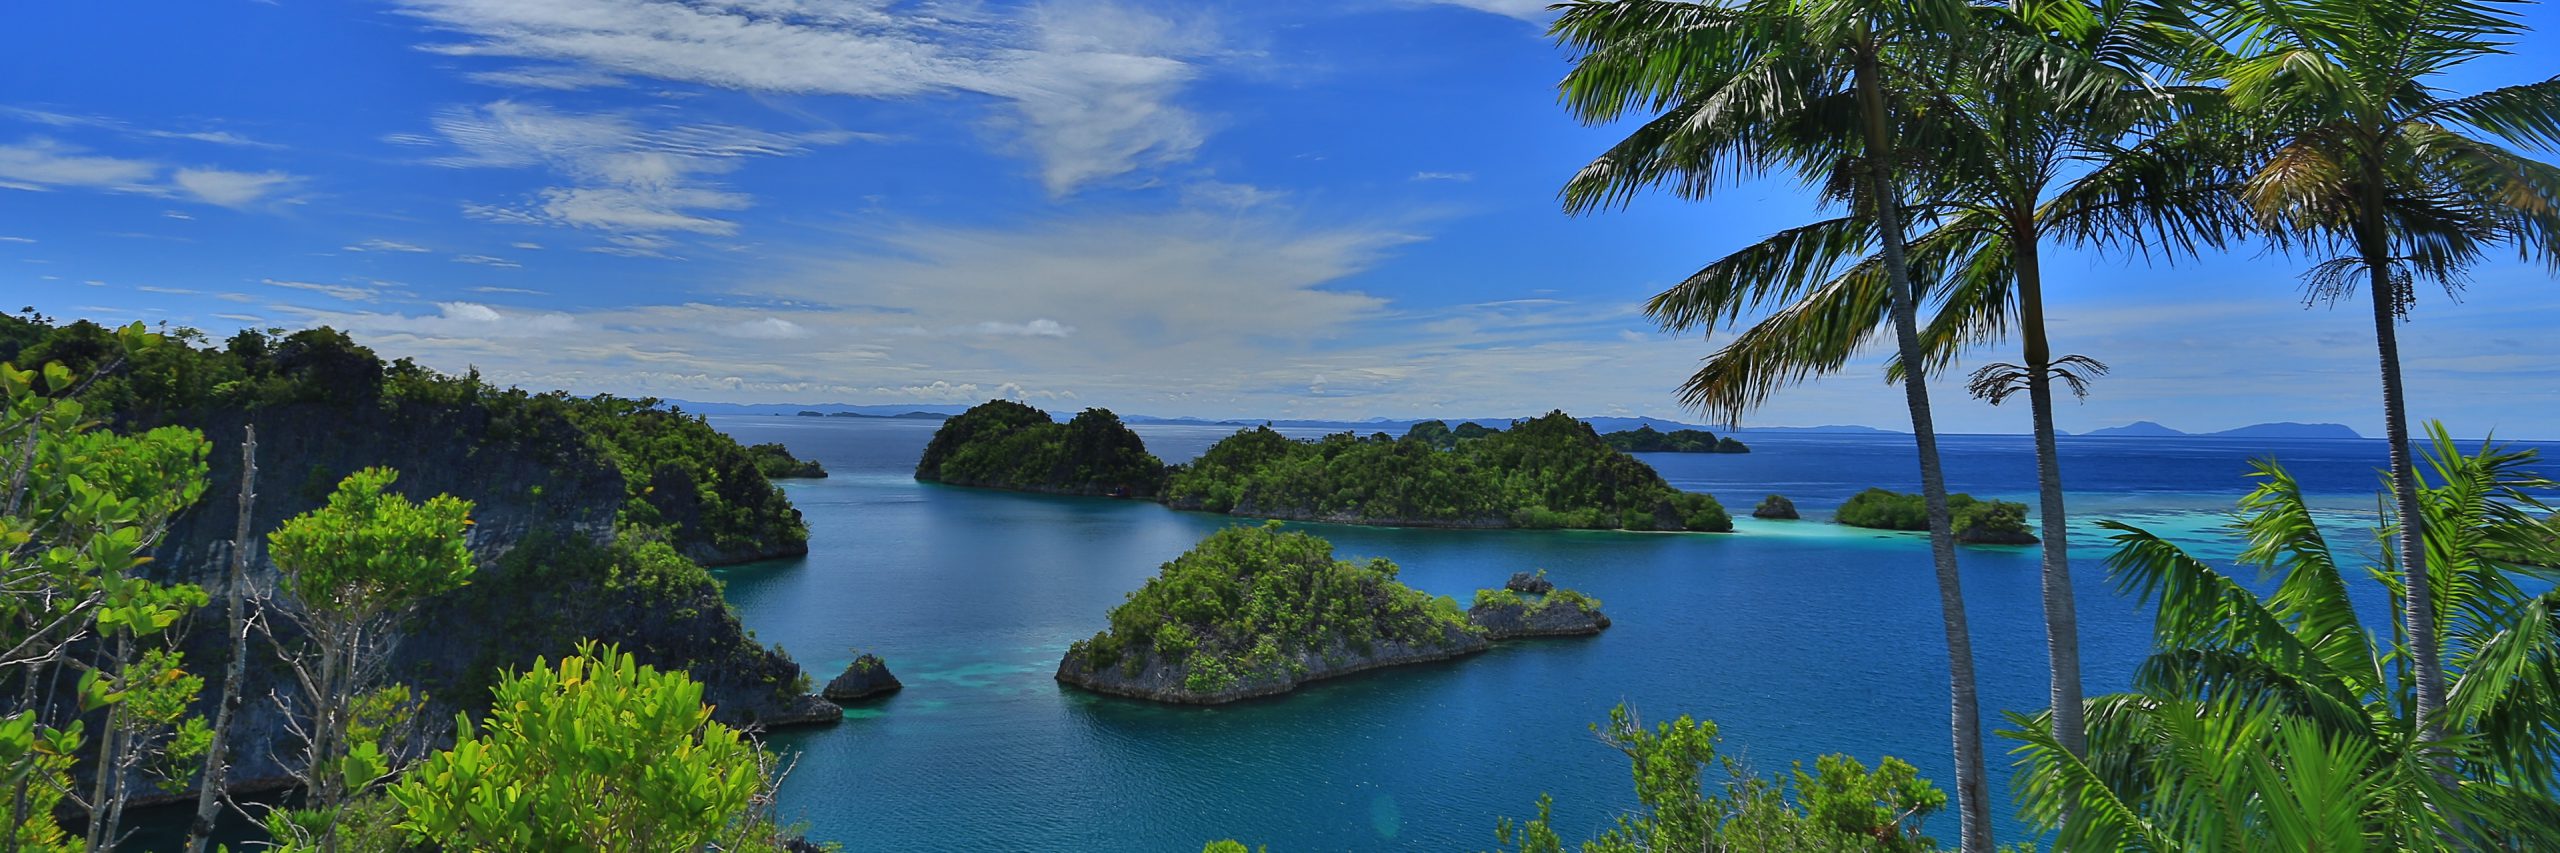 Raja Ampat: Surga Petualangan Dunia di Ujung Papua - Indonesia Kaya